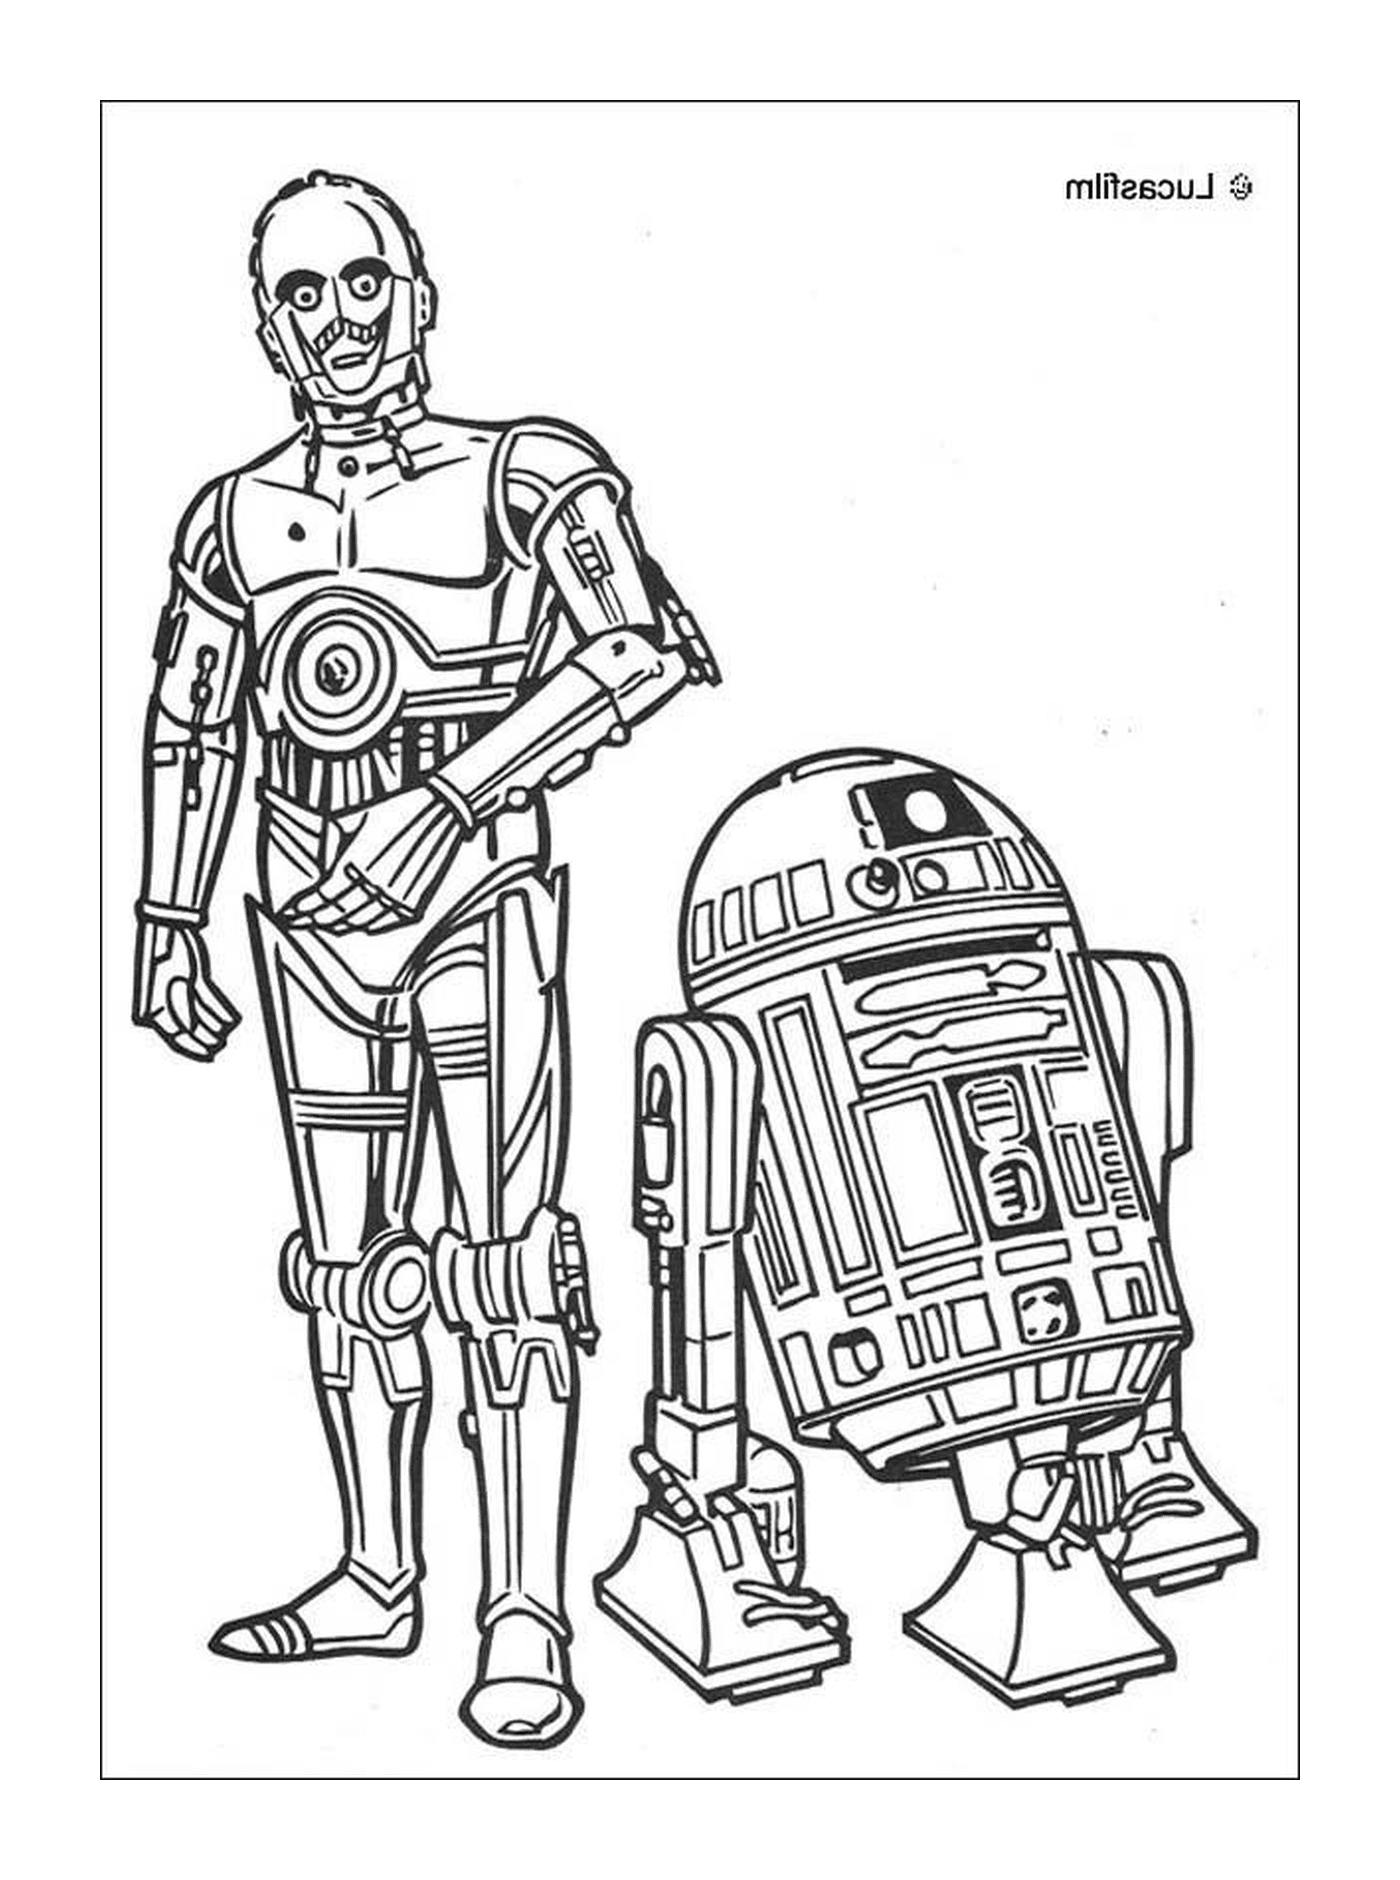  R2D2 and C3PO, companions 